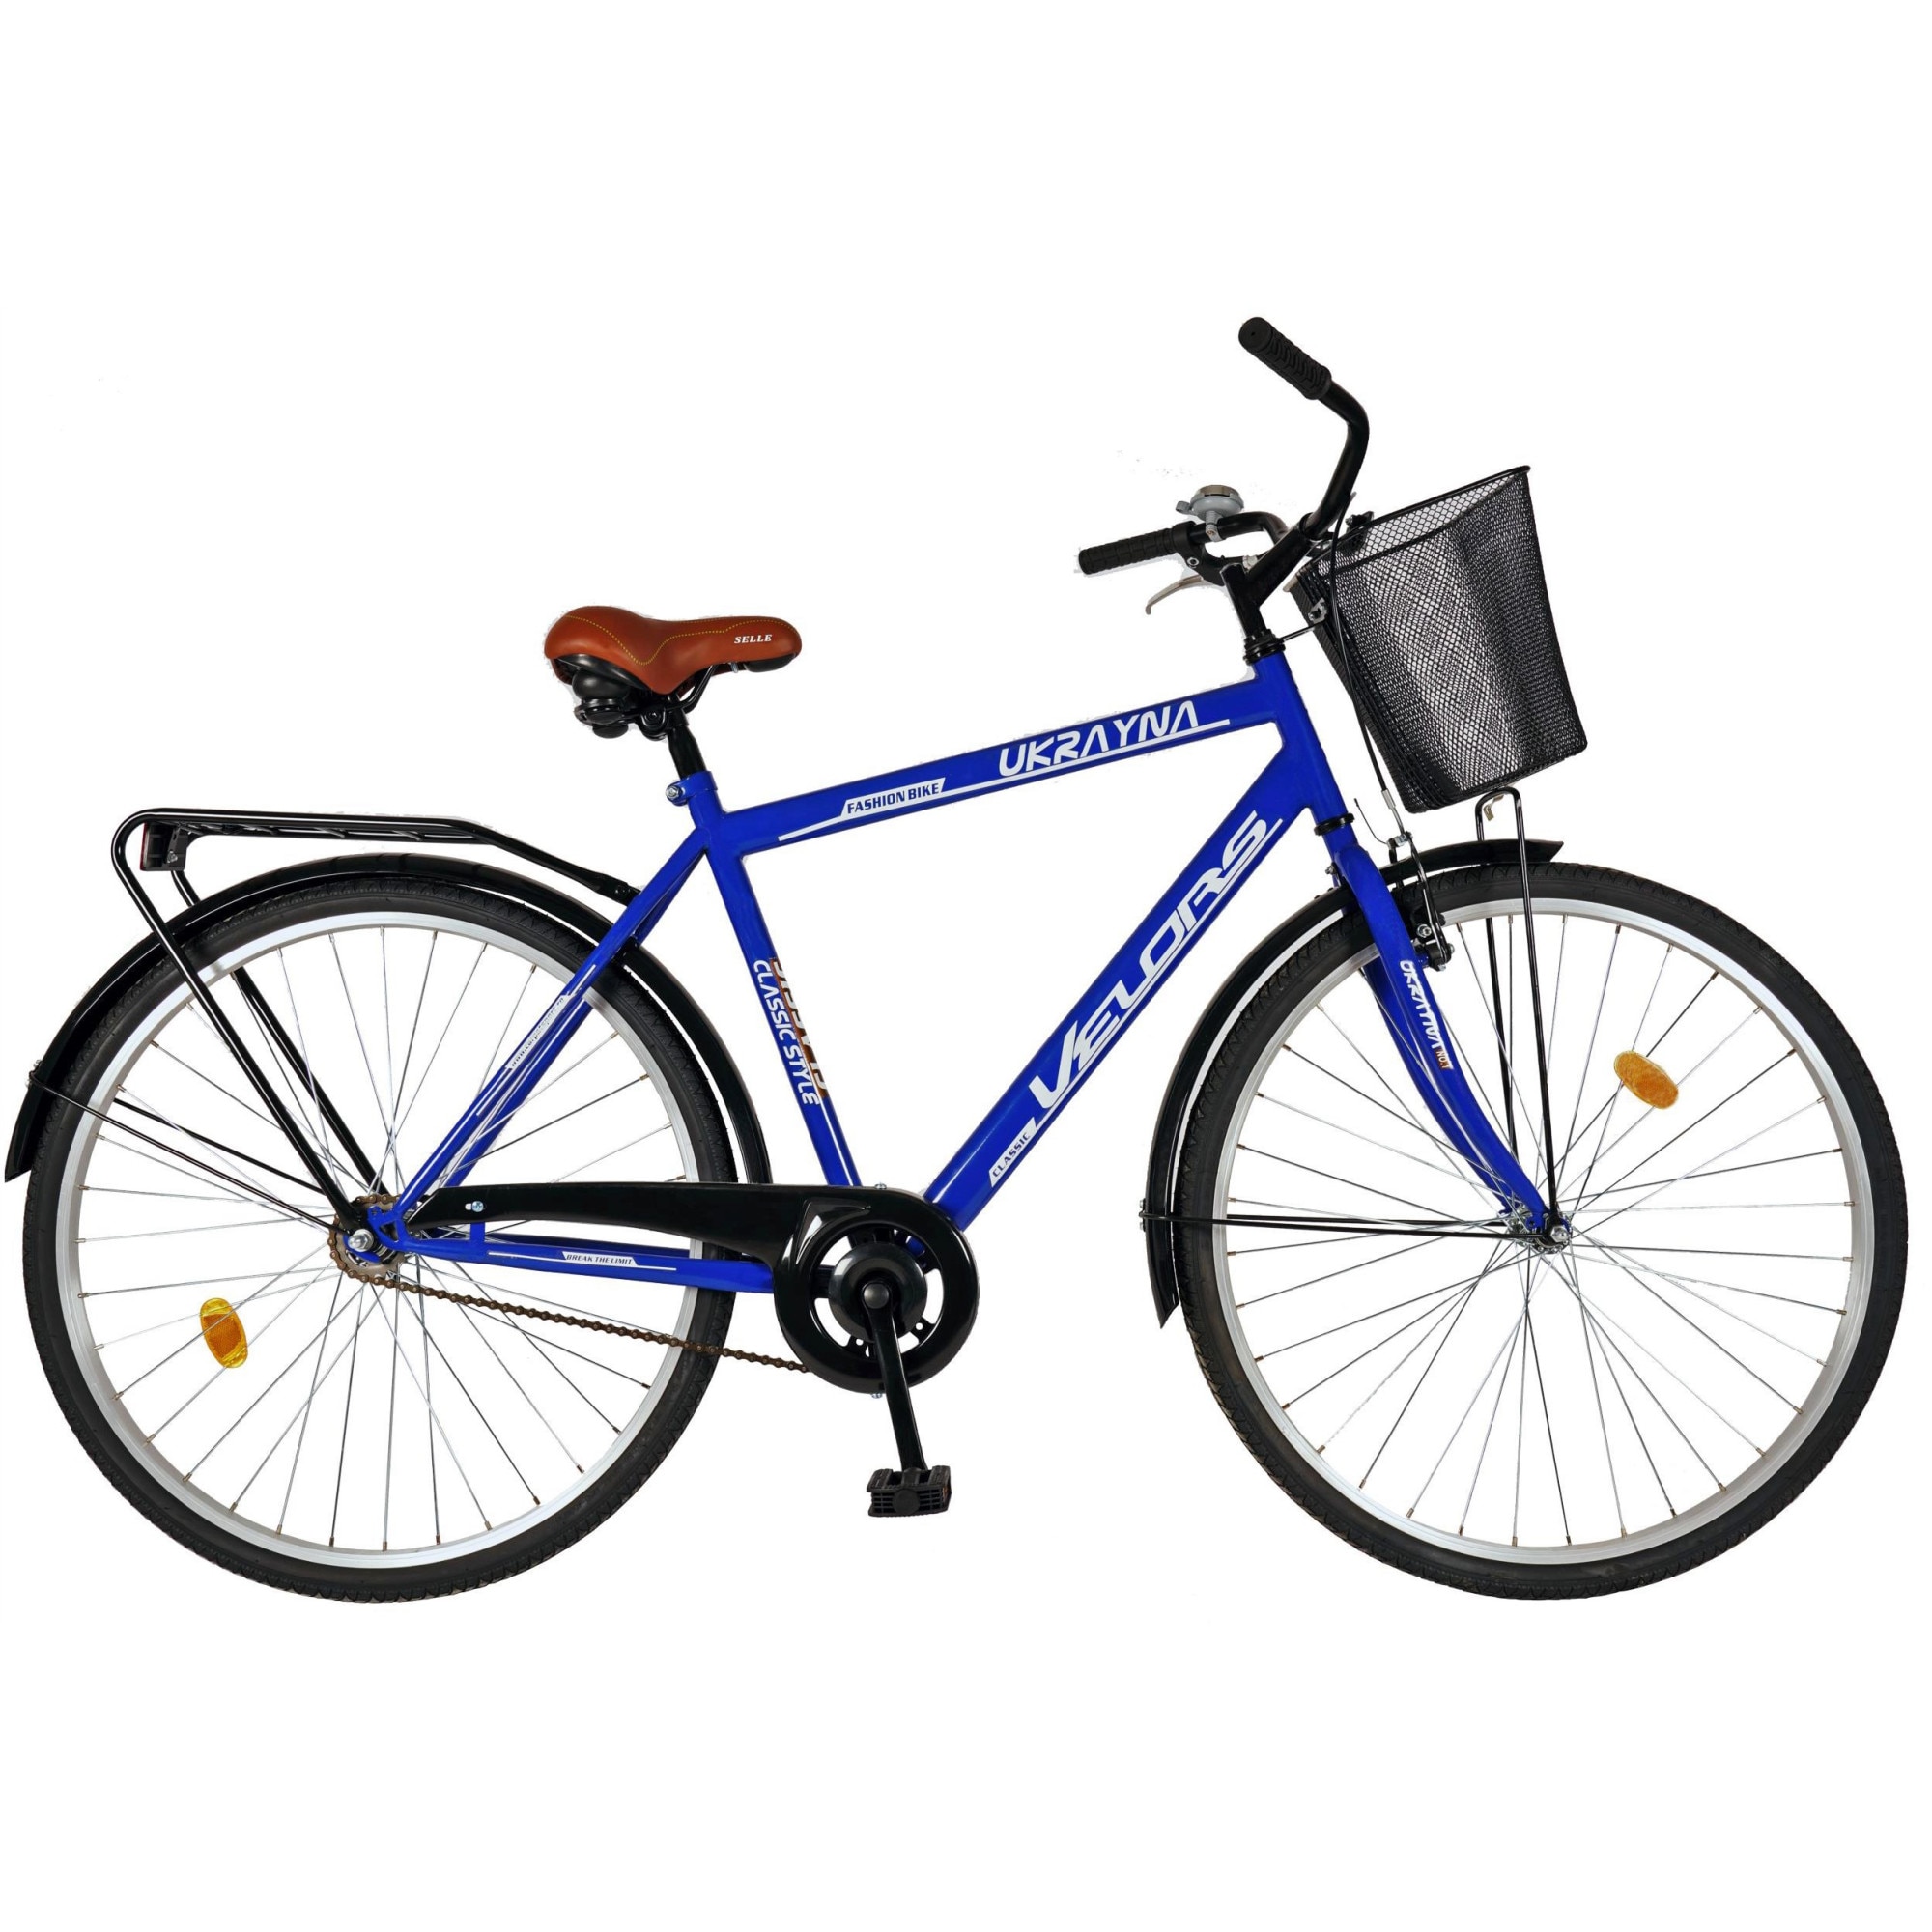 Spoil background cubic Bicicleta pentru oras Ukraina 2893, roata 28 inch, frana tip V-brake fata,  frana Torpedo spate, albastru cu alb - eMAG.ro